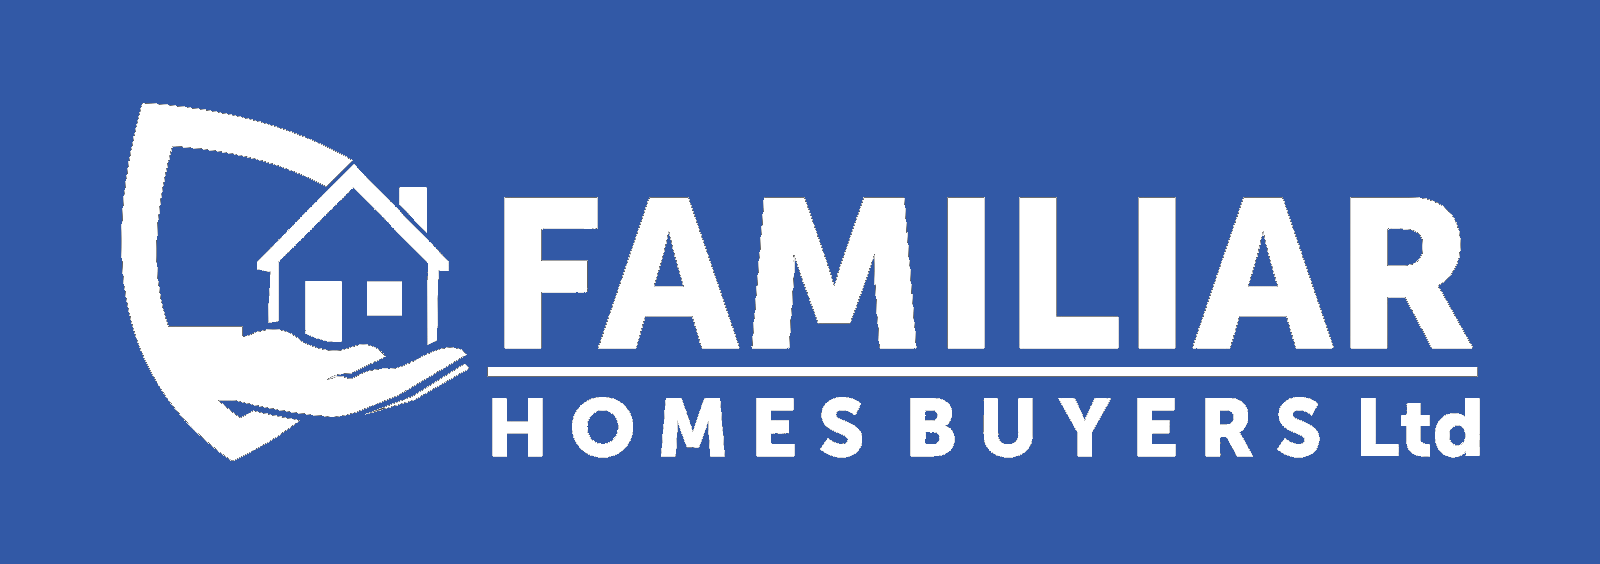 Familiar Home Buyers LTD - Stoke On Trent Home Buyers